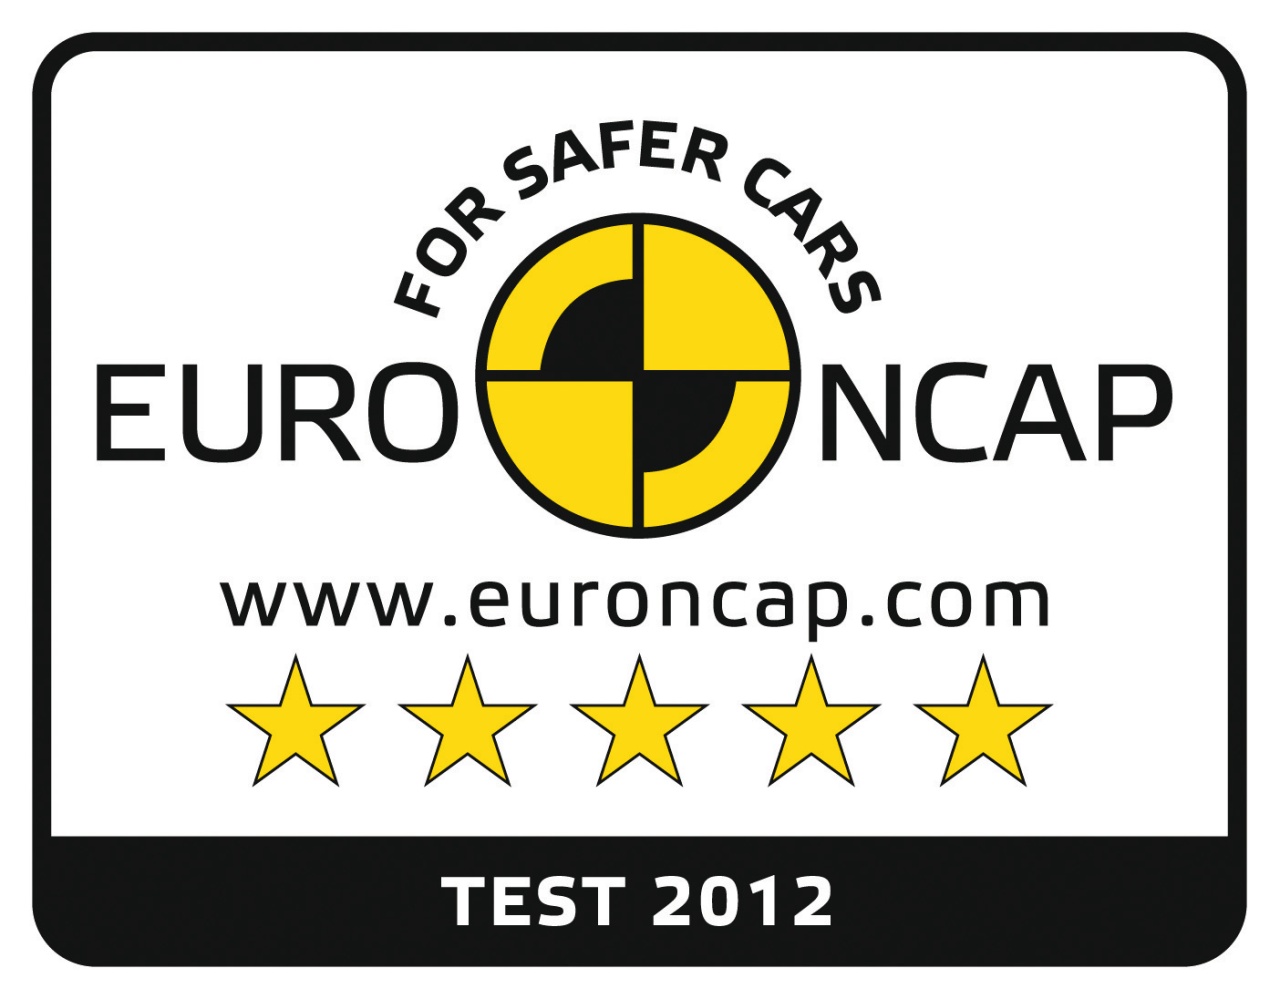 EuroNCAP logo, test 2012 5 stars